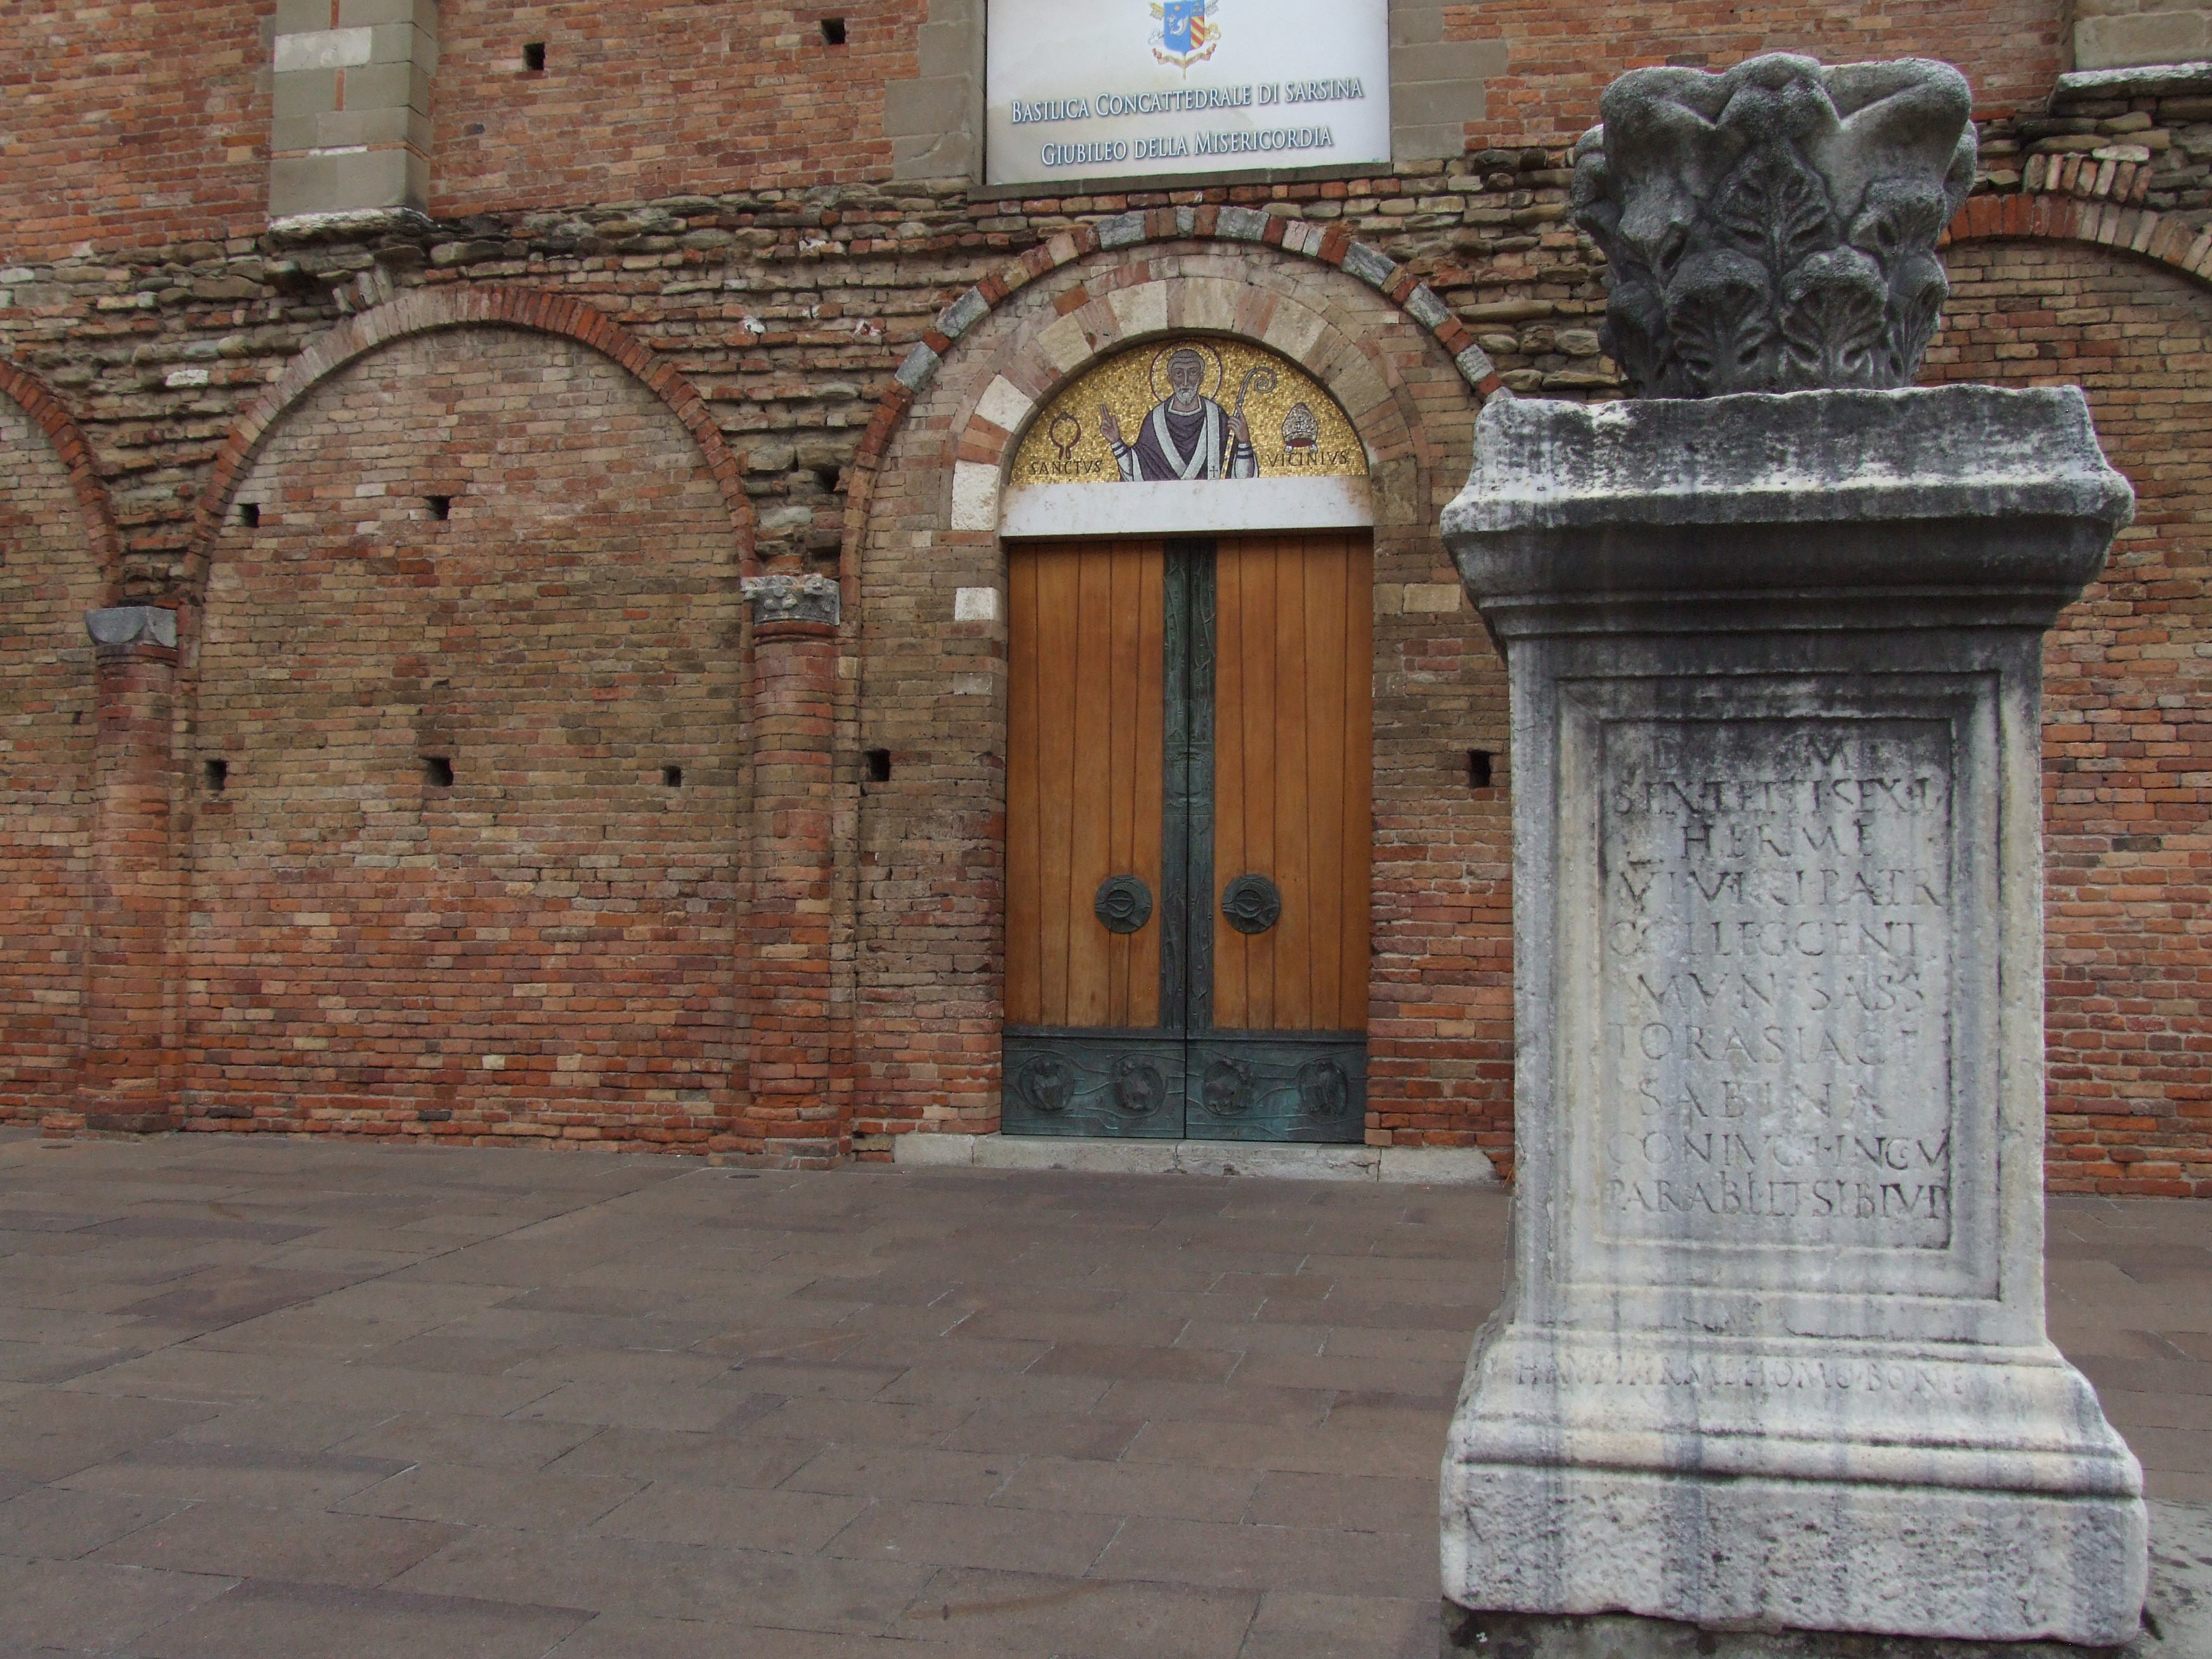 foto: https://upload.wikimedia.org/wikipedia/commons/f/f5/Basilica_concattedrale_di_Sarsina_-_12.jpg